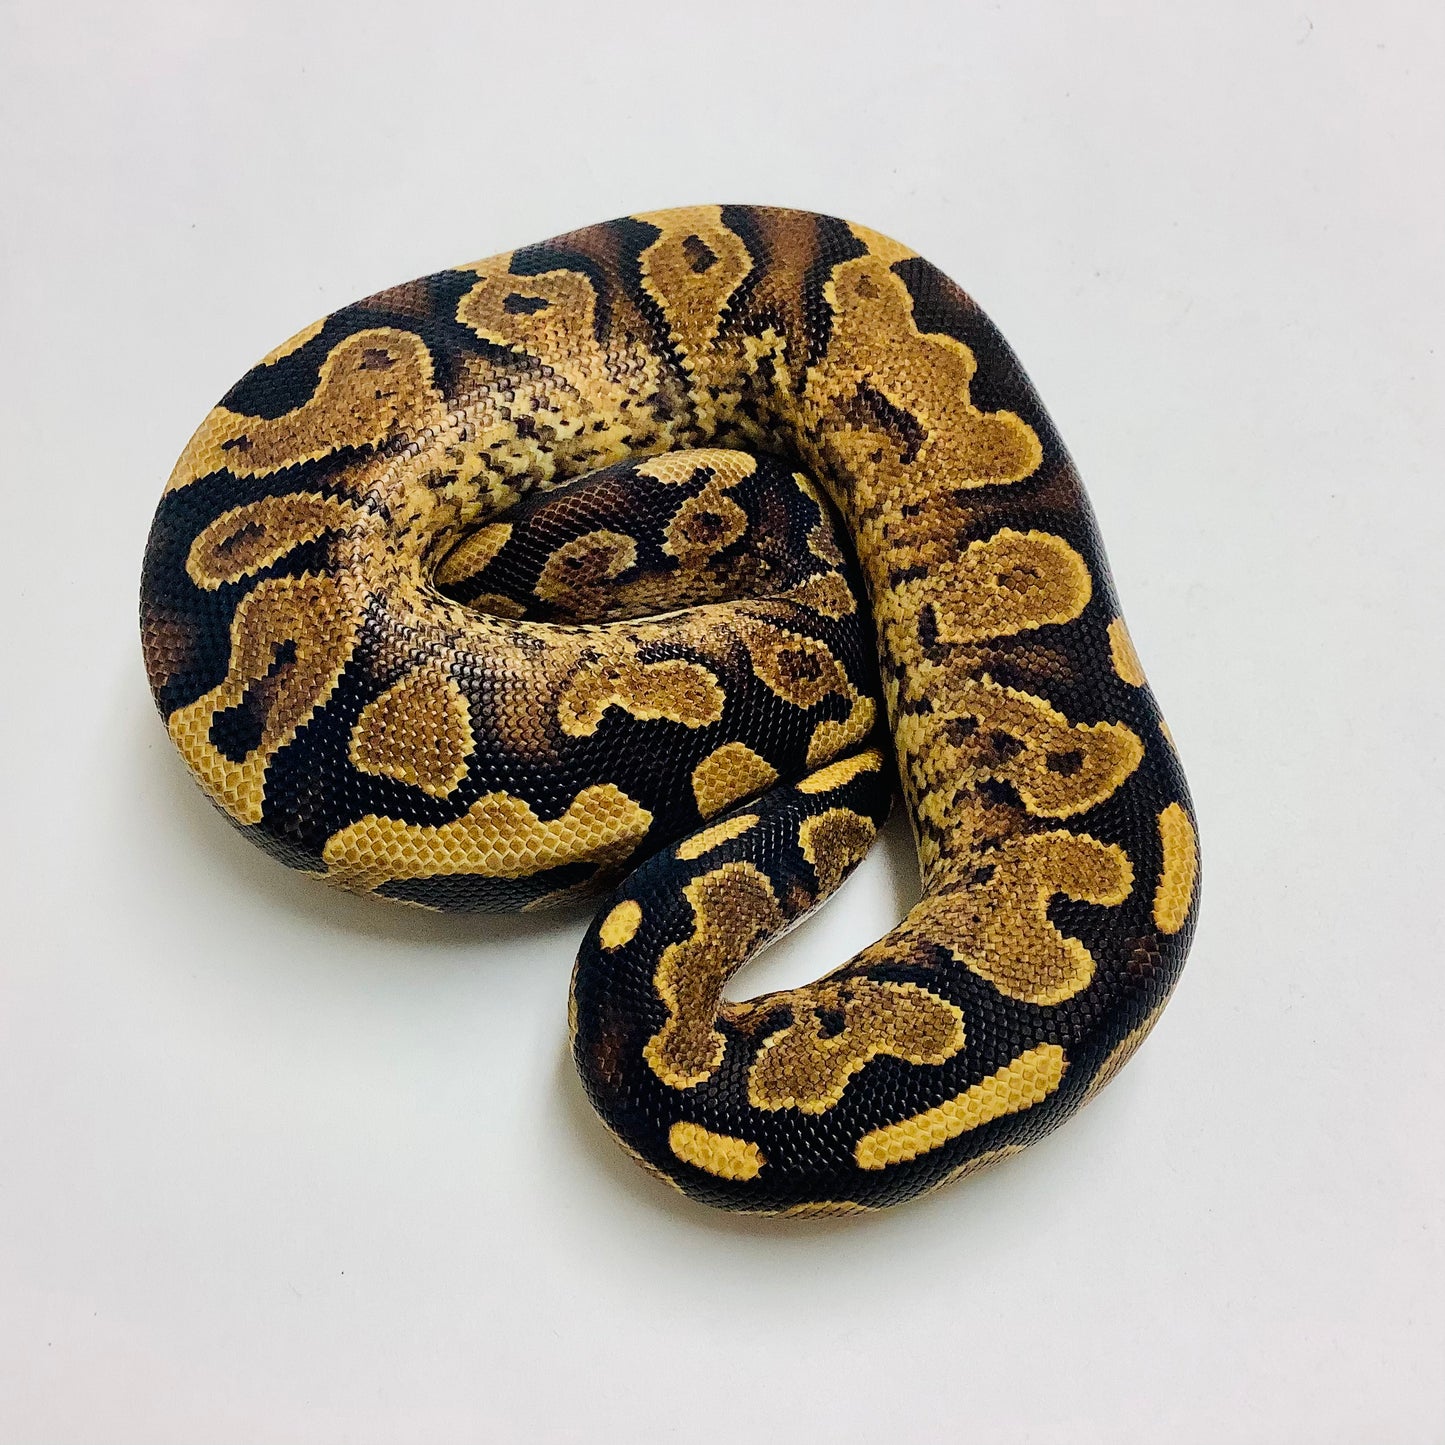 Calico Yellowbelly Ball Python- Female #2022F01